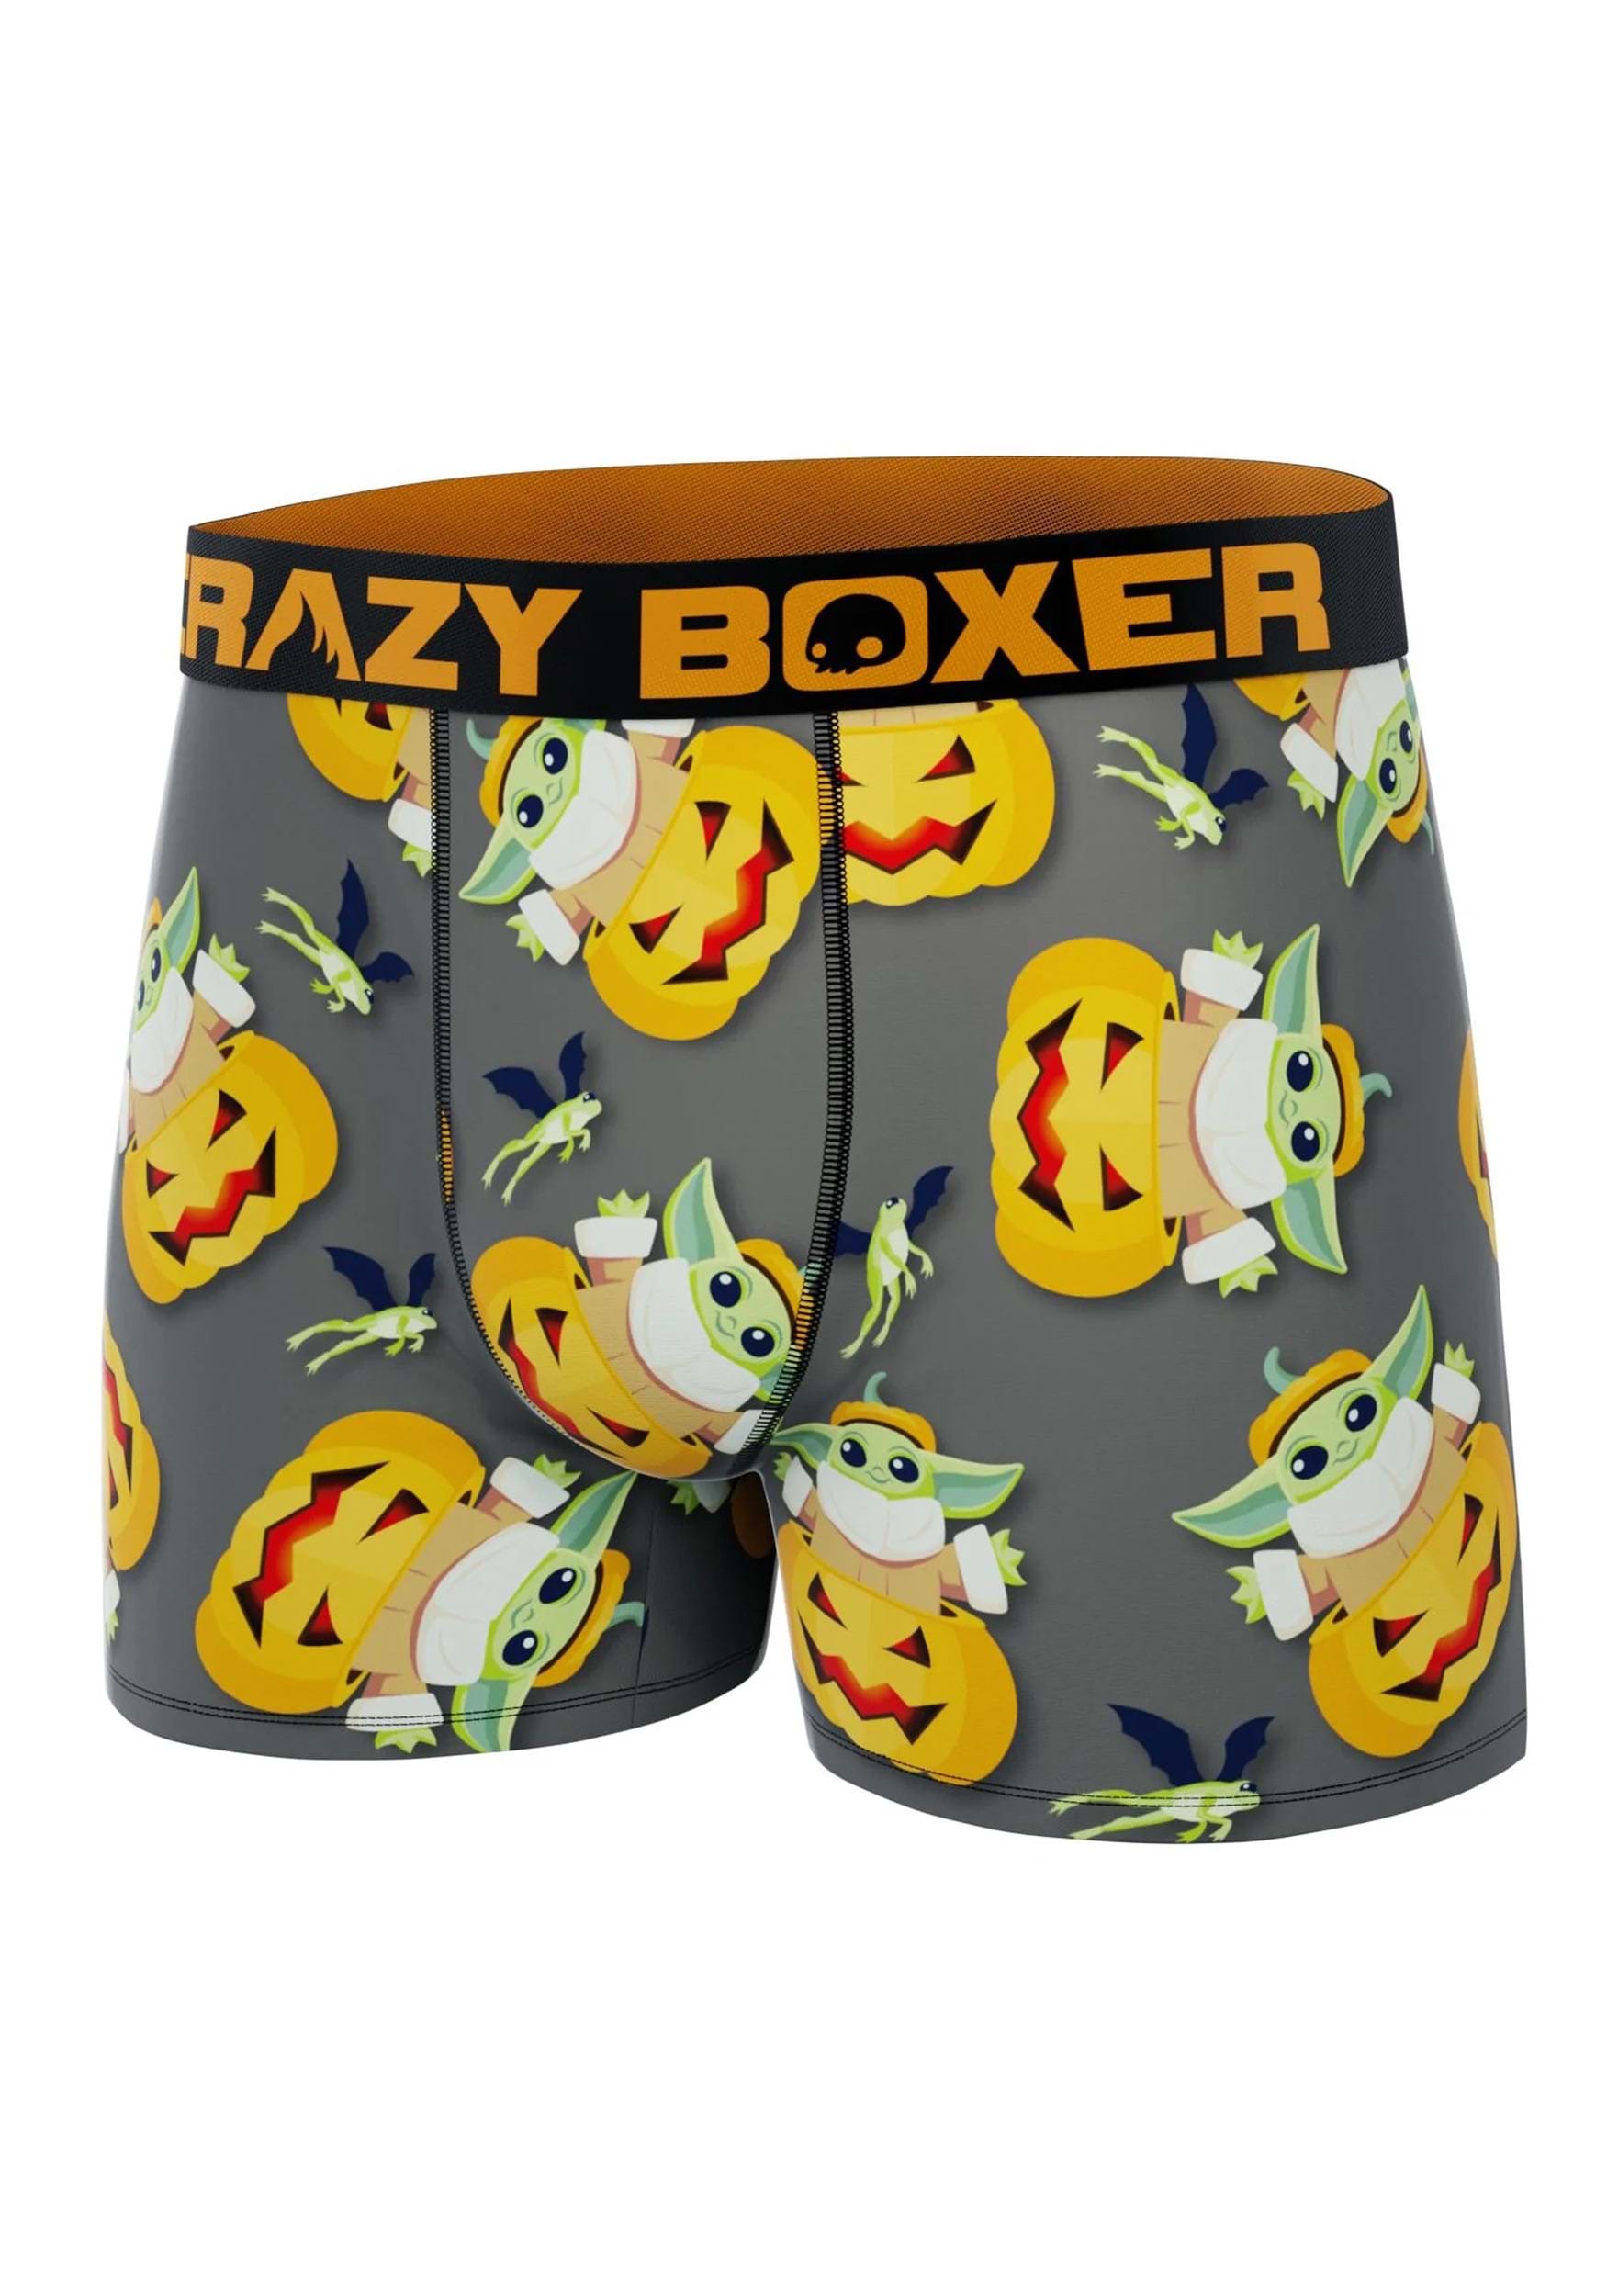 Crazy Boxers The Child Boxer Briefs for Men